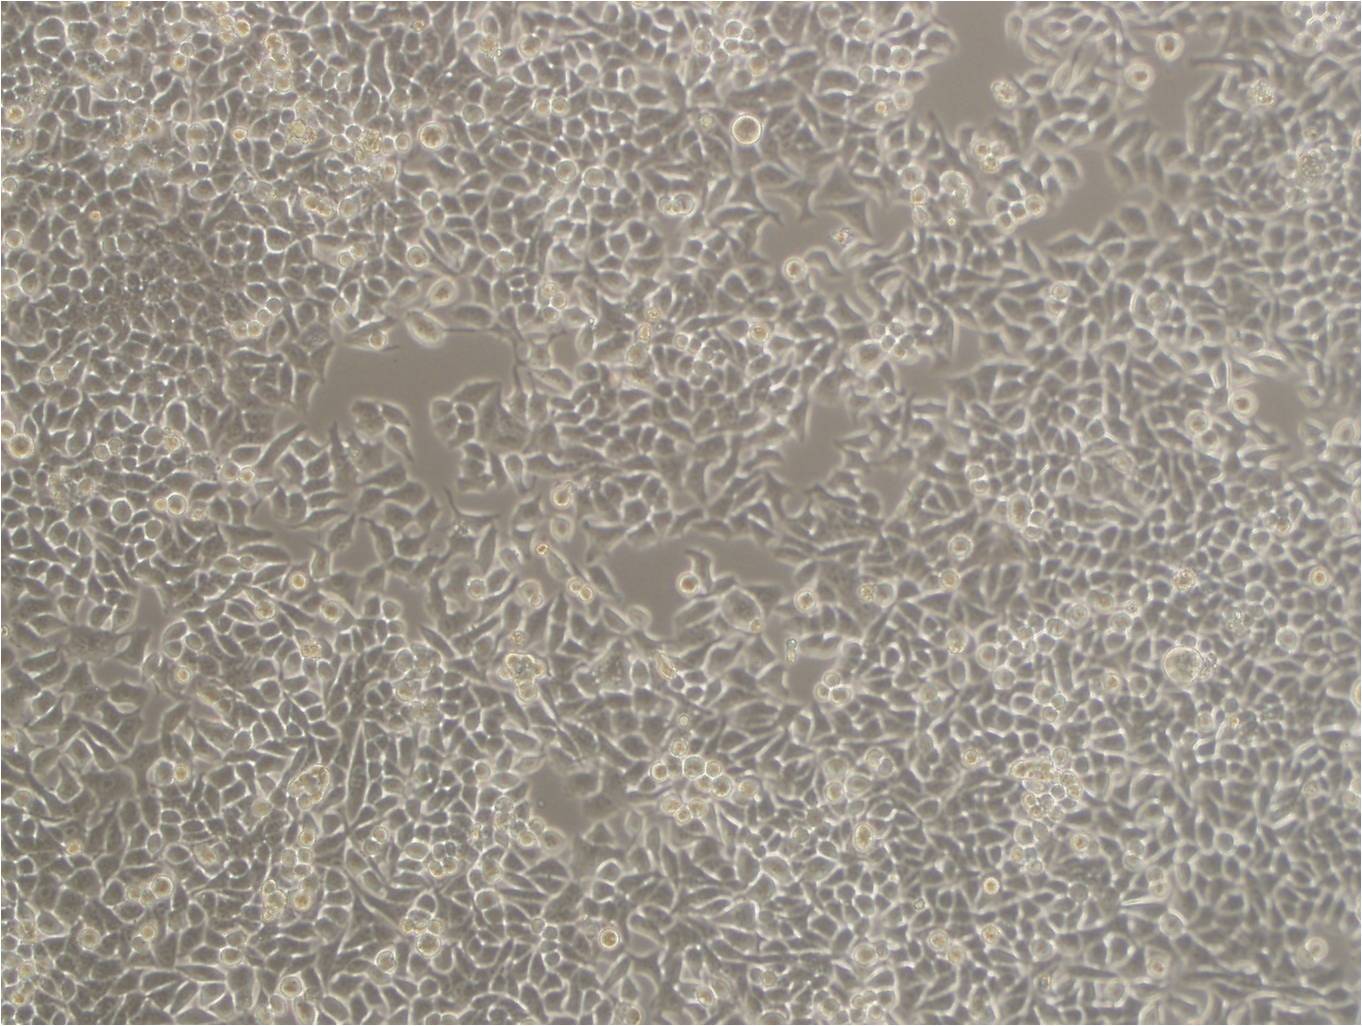 NCI-H2171 Fresh Cells|人小细胞肺癌细胞(送STR基因图谱),NCI-H2171 Fresh Cells